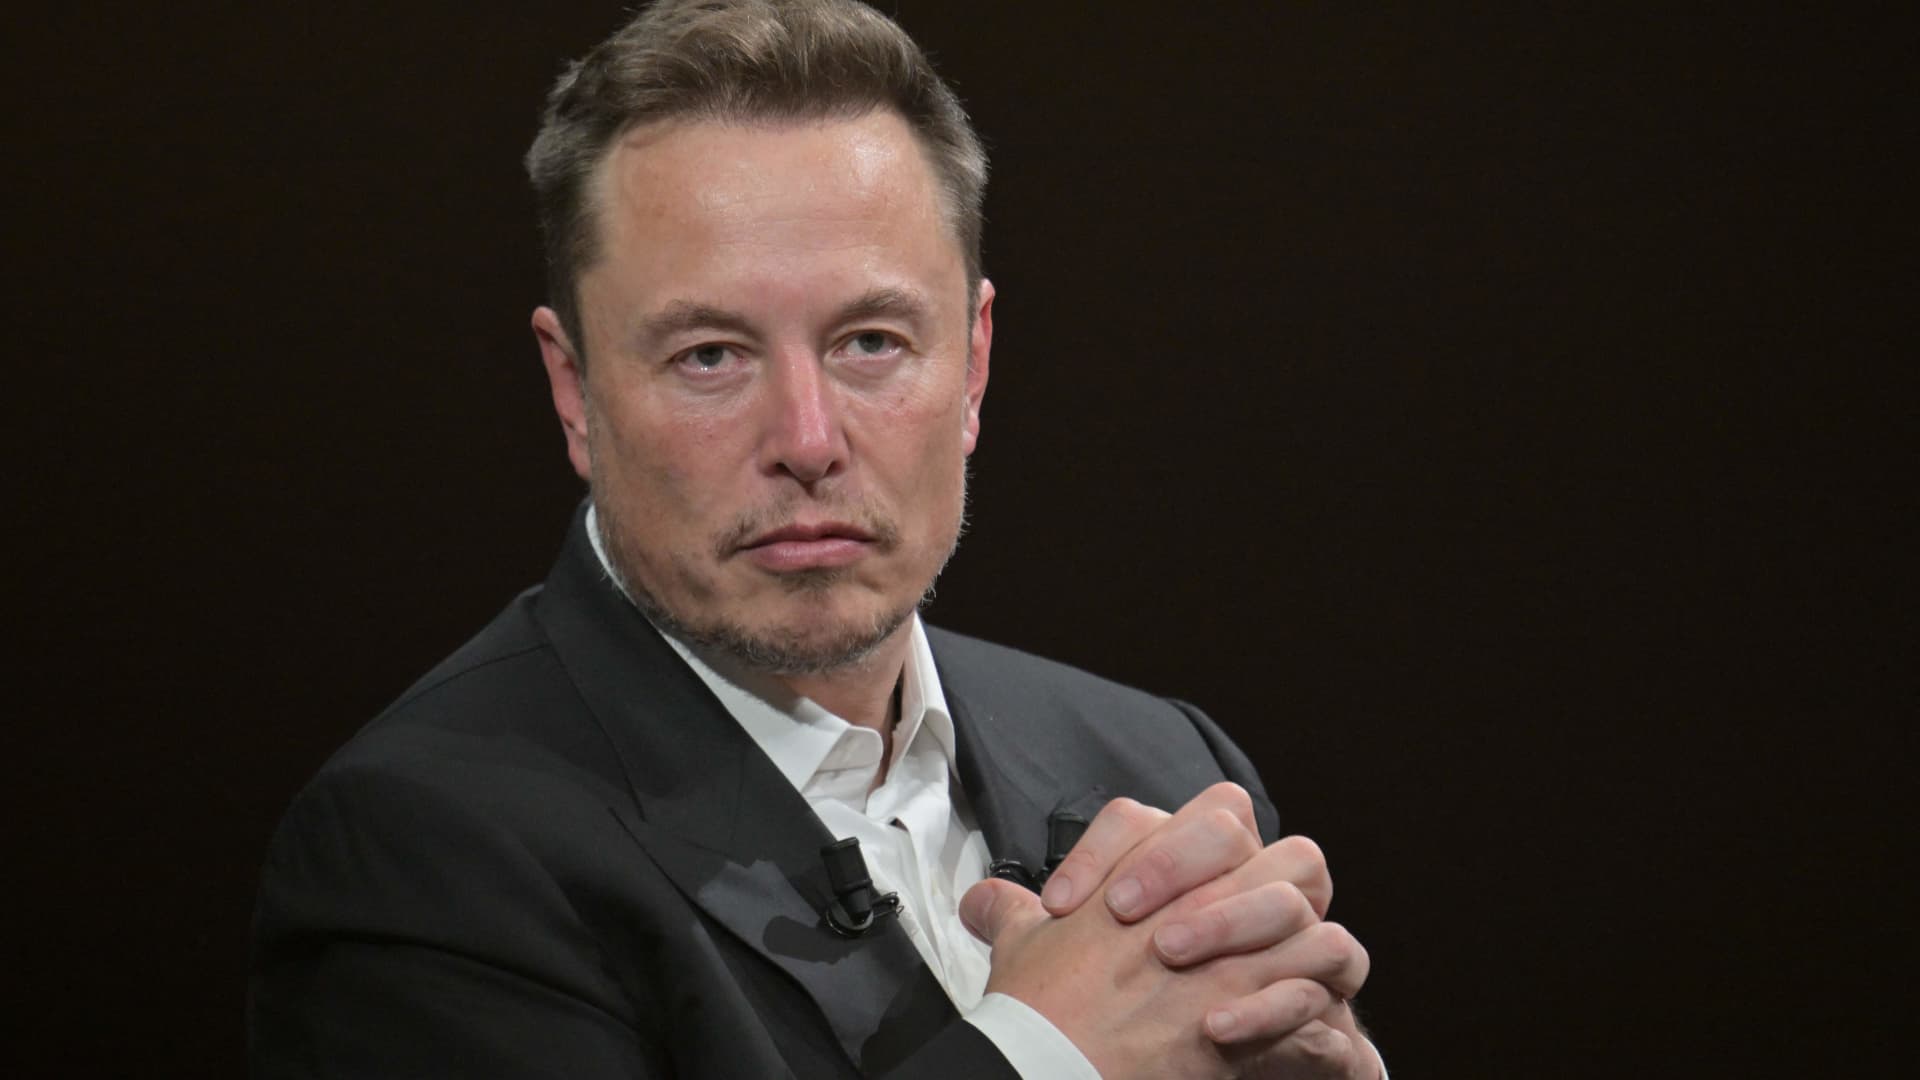 Elon Musk says Twitter cash flow is negative due to ad revenue declines, ‘heavy debt’